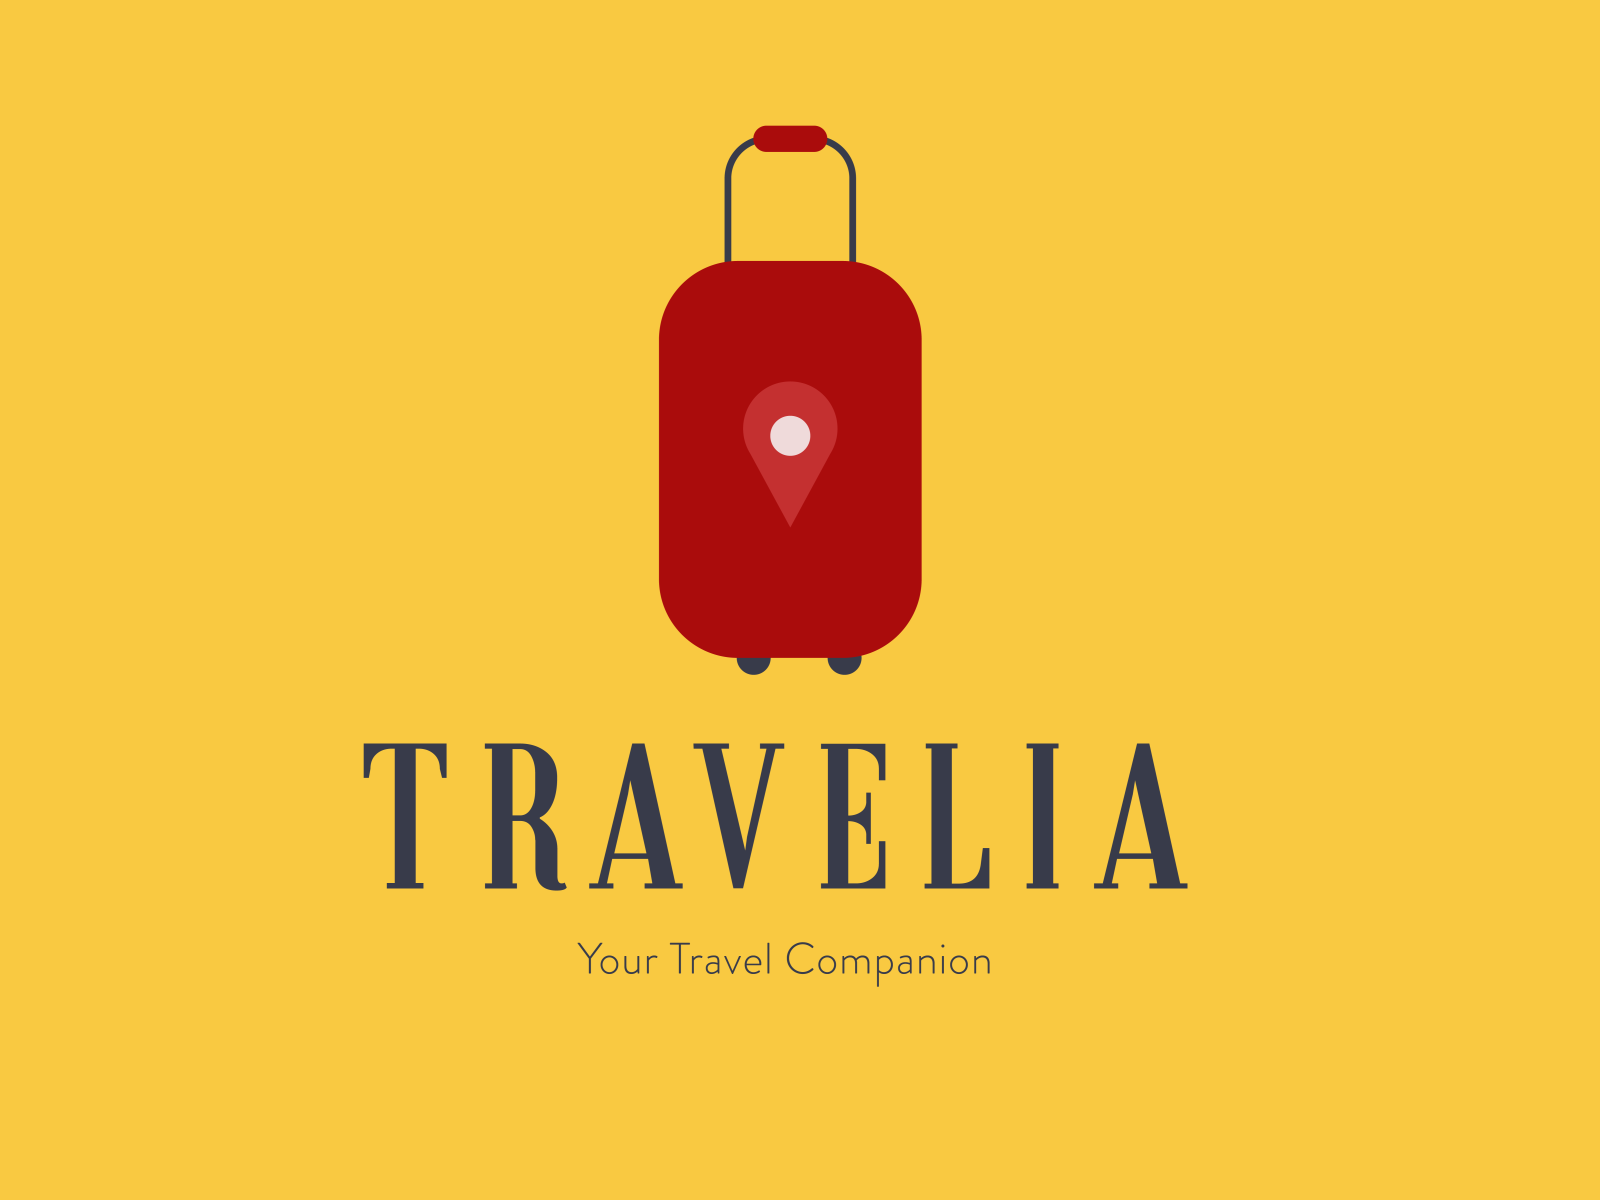 Travelia Travel Logo Design Samples by Maruf Chowdhury | Shopify ...